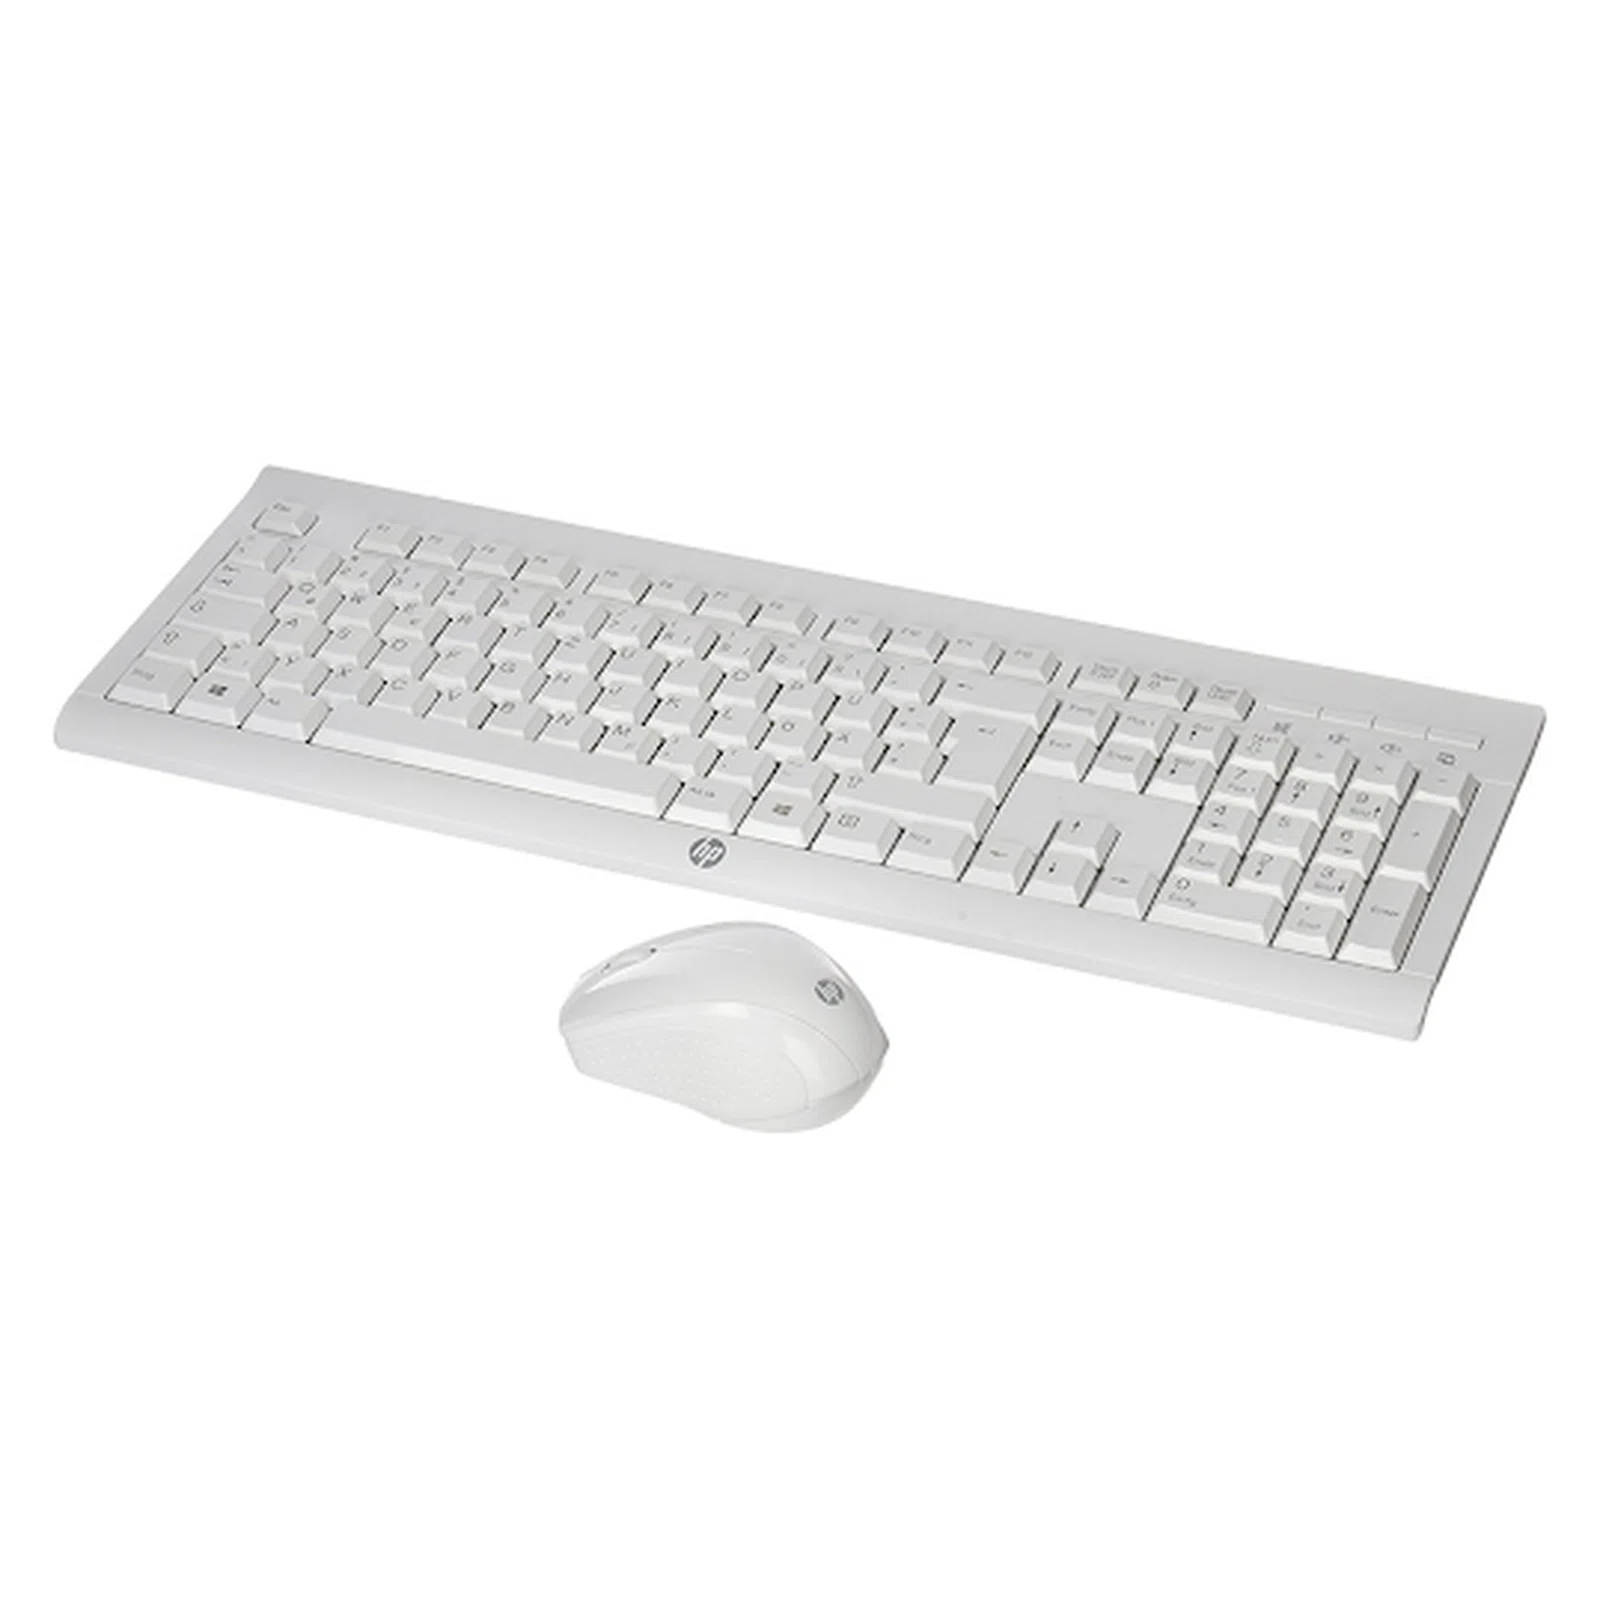 HP C2710 Combo Keyboard ENG